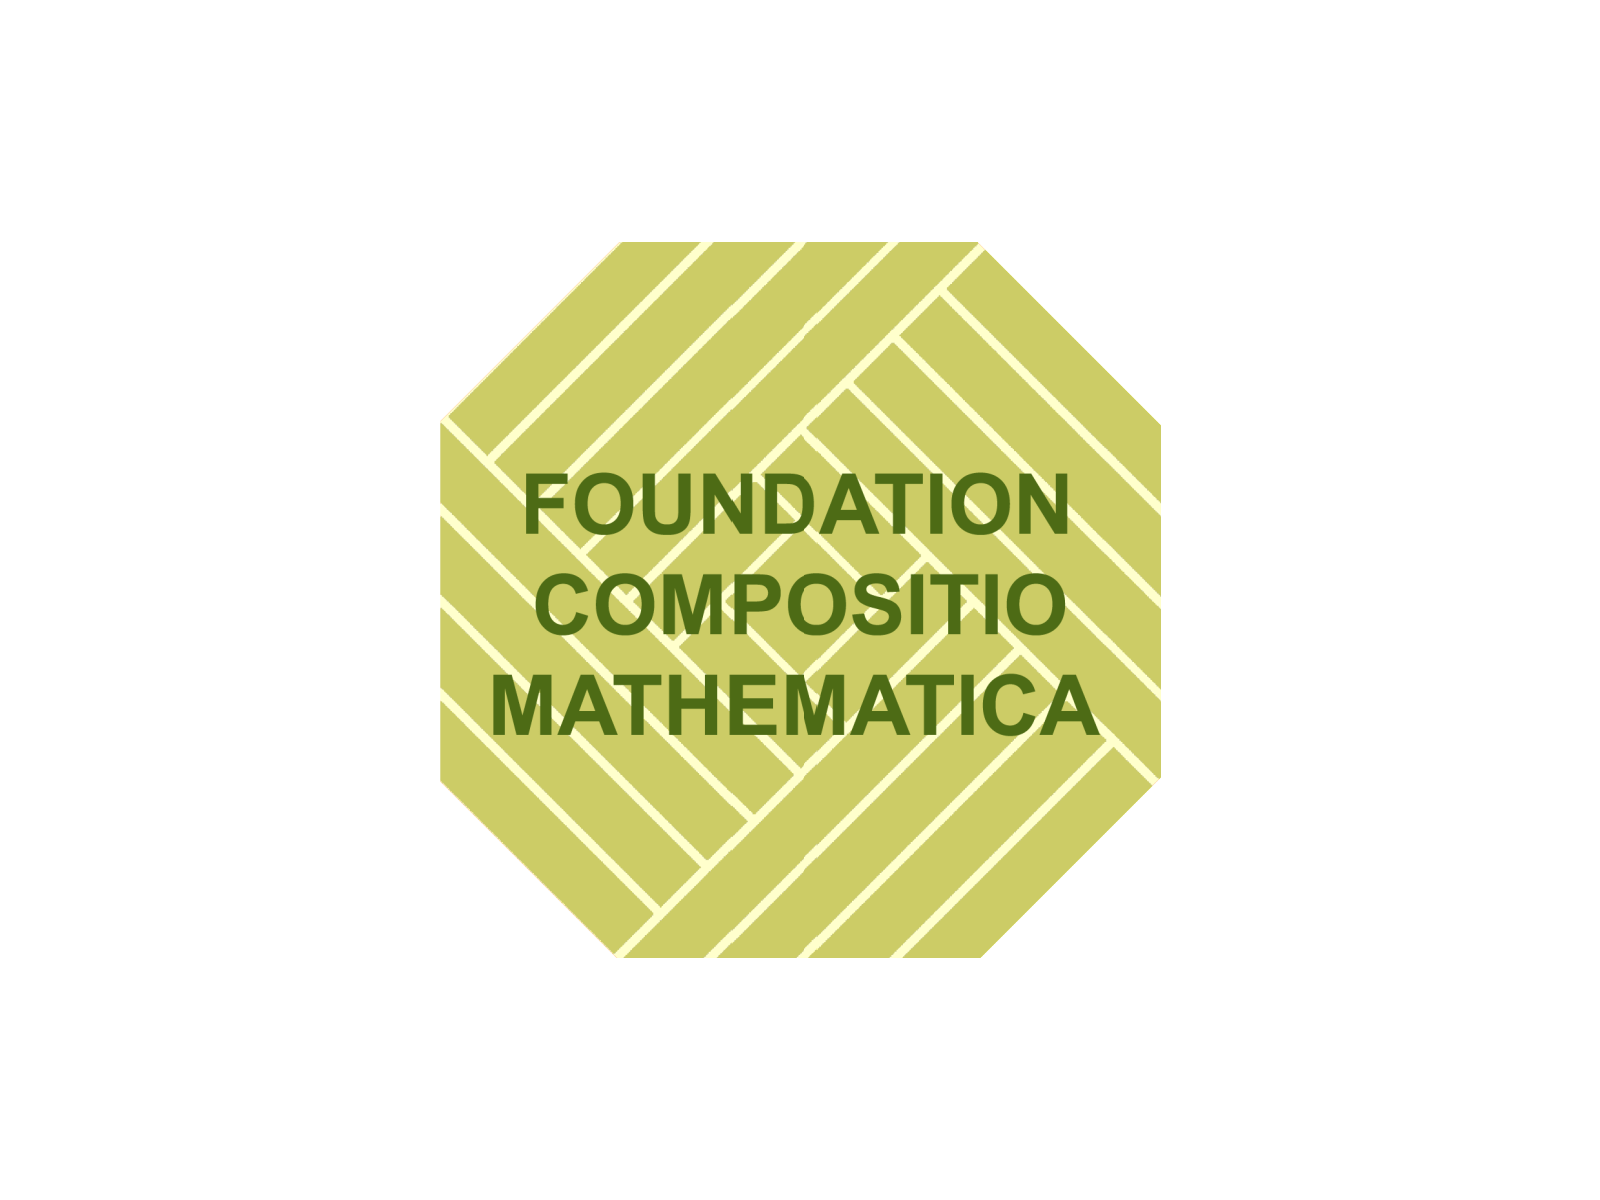 Composition Mathematica